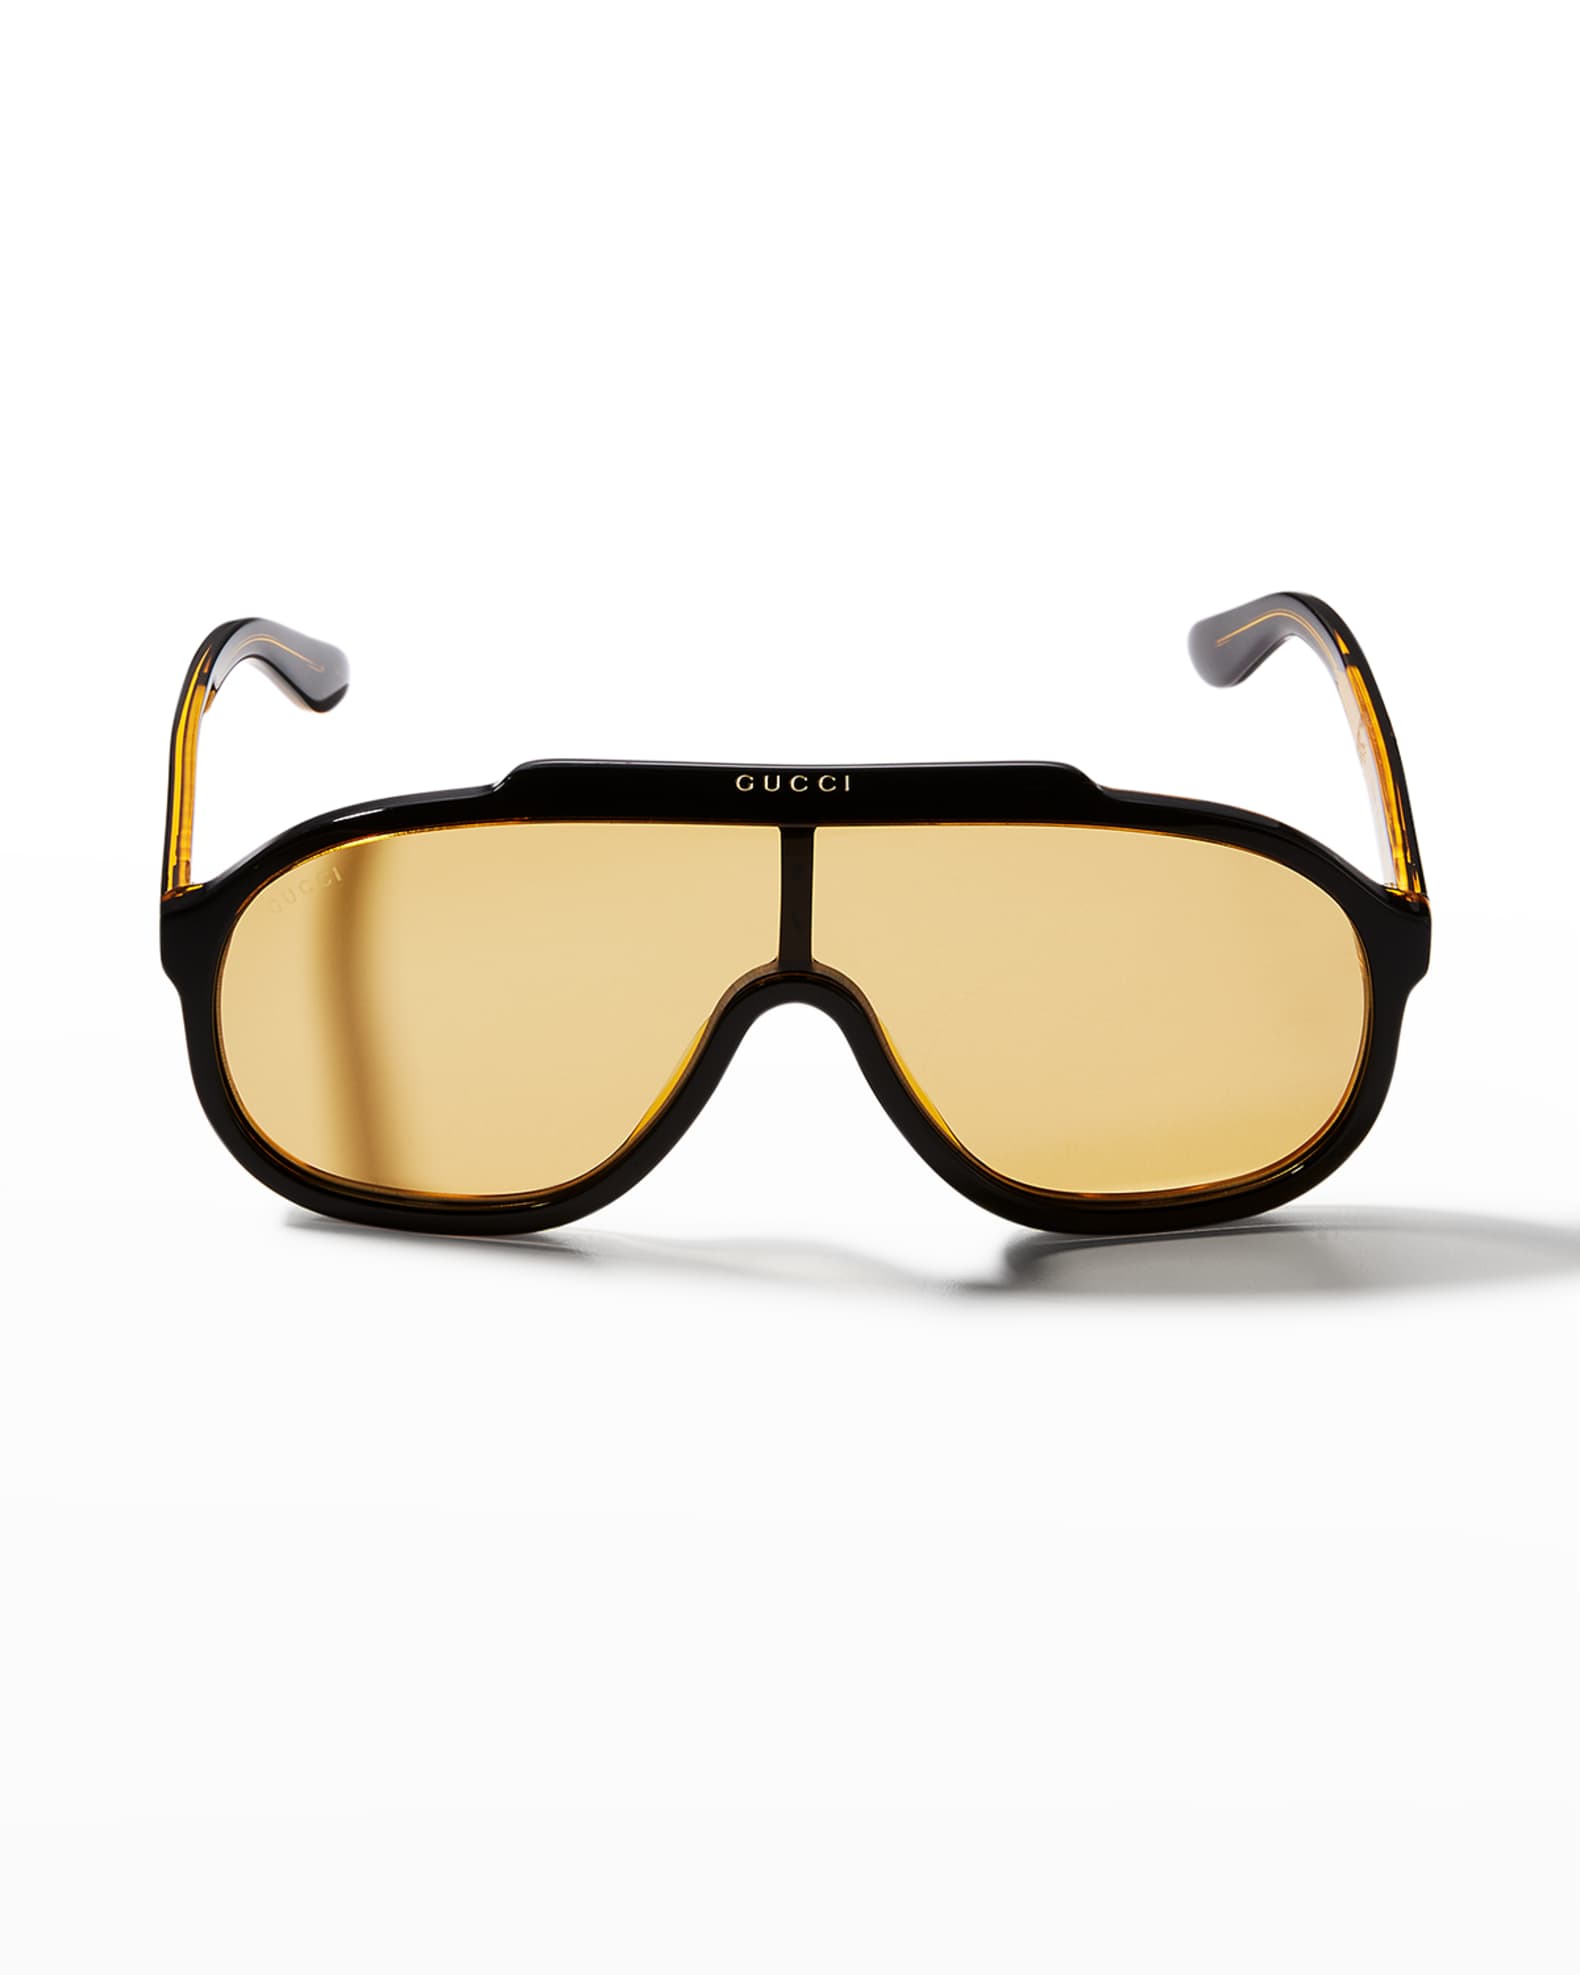 Gucci Men's Acetate Aviator Sunglasses | Neiman Marcus